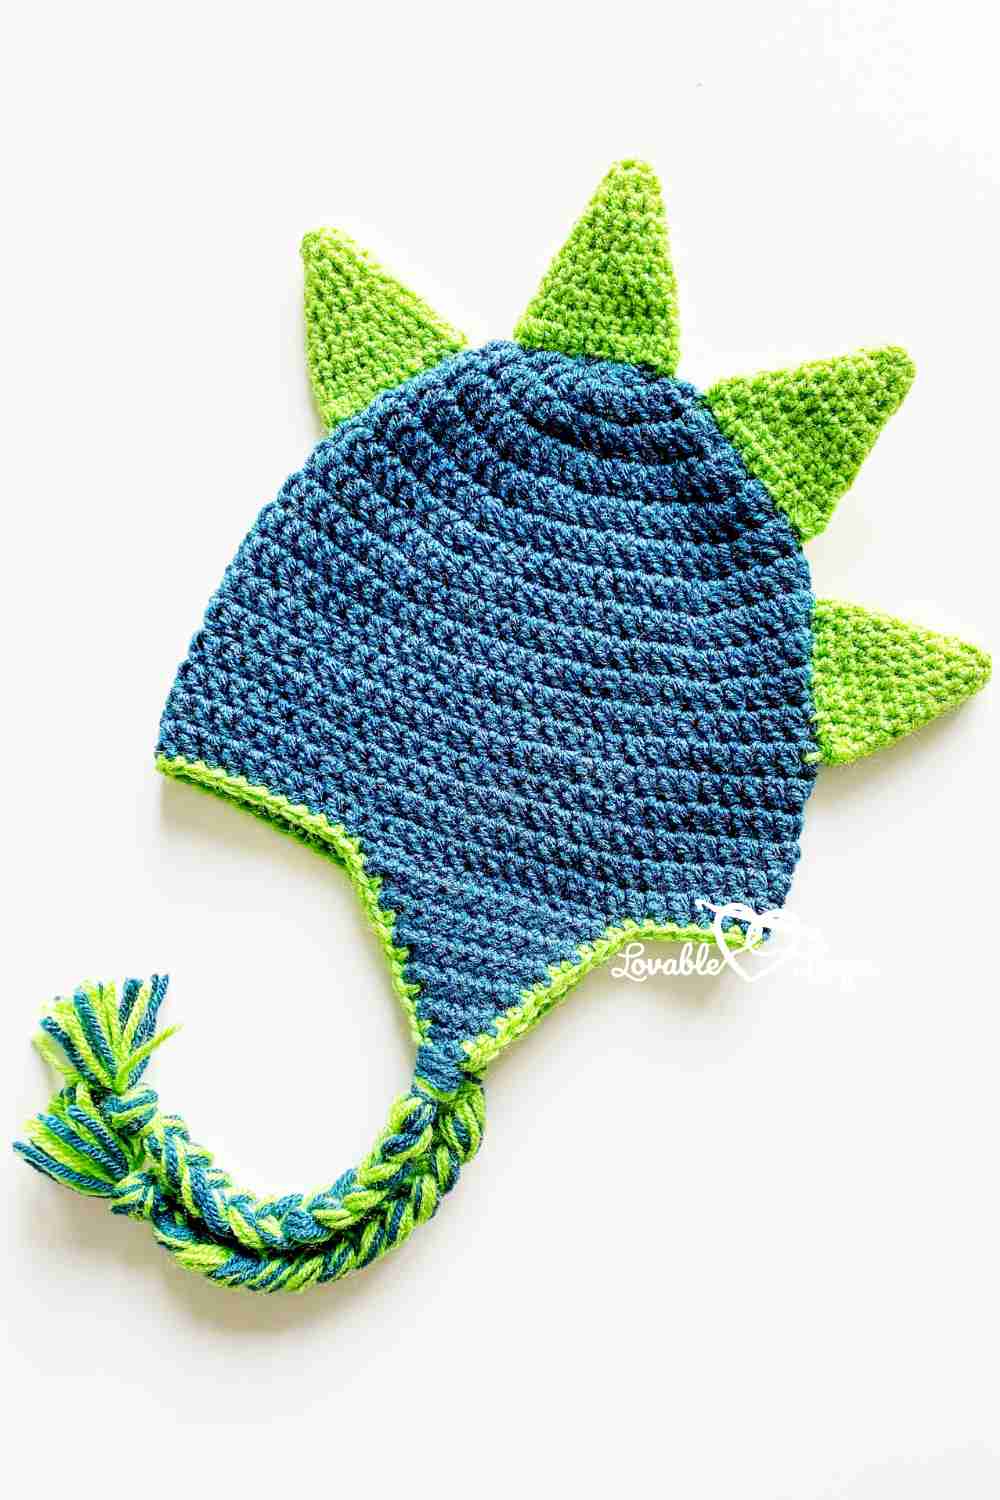 Crochet Dinosaur Hat - Free Crochet Pattern